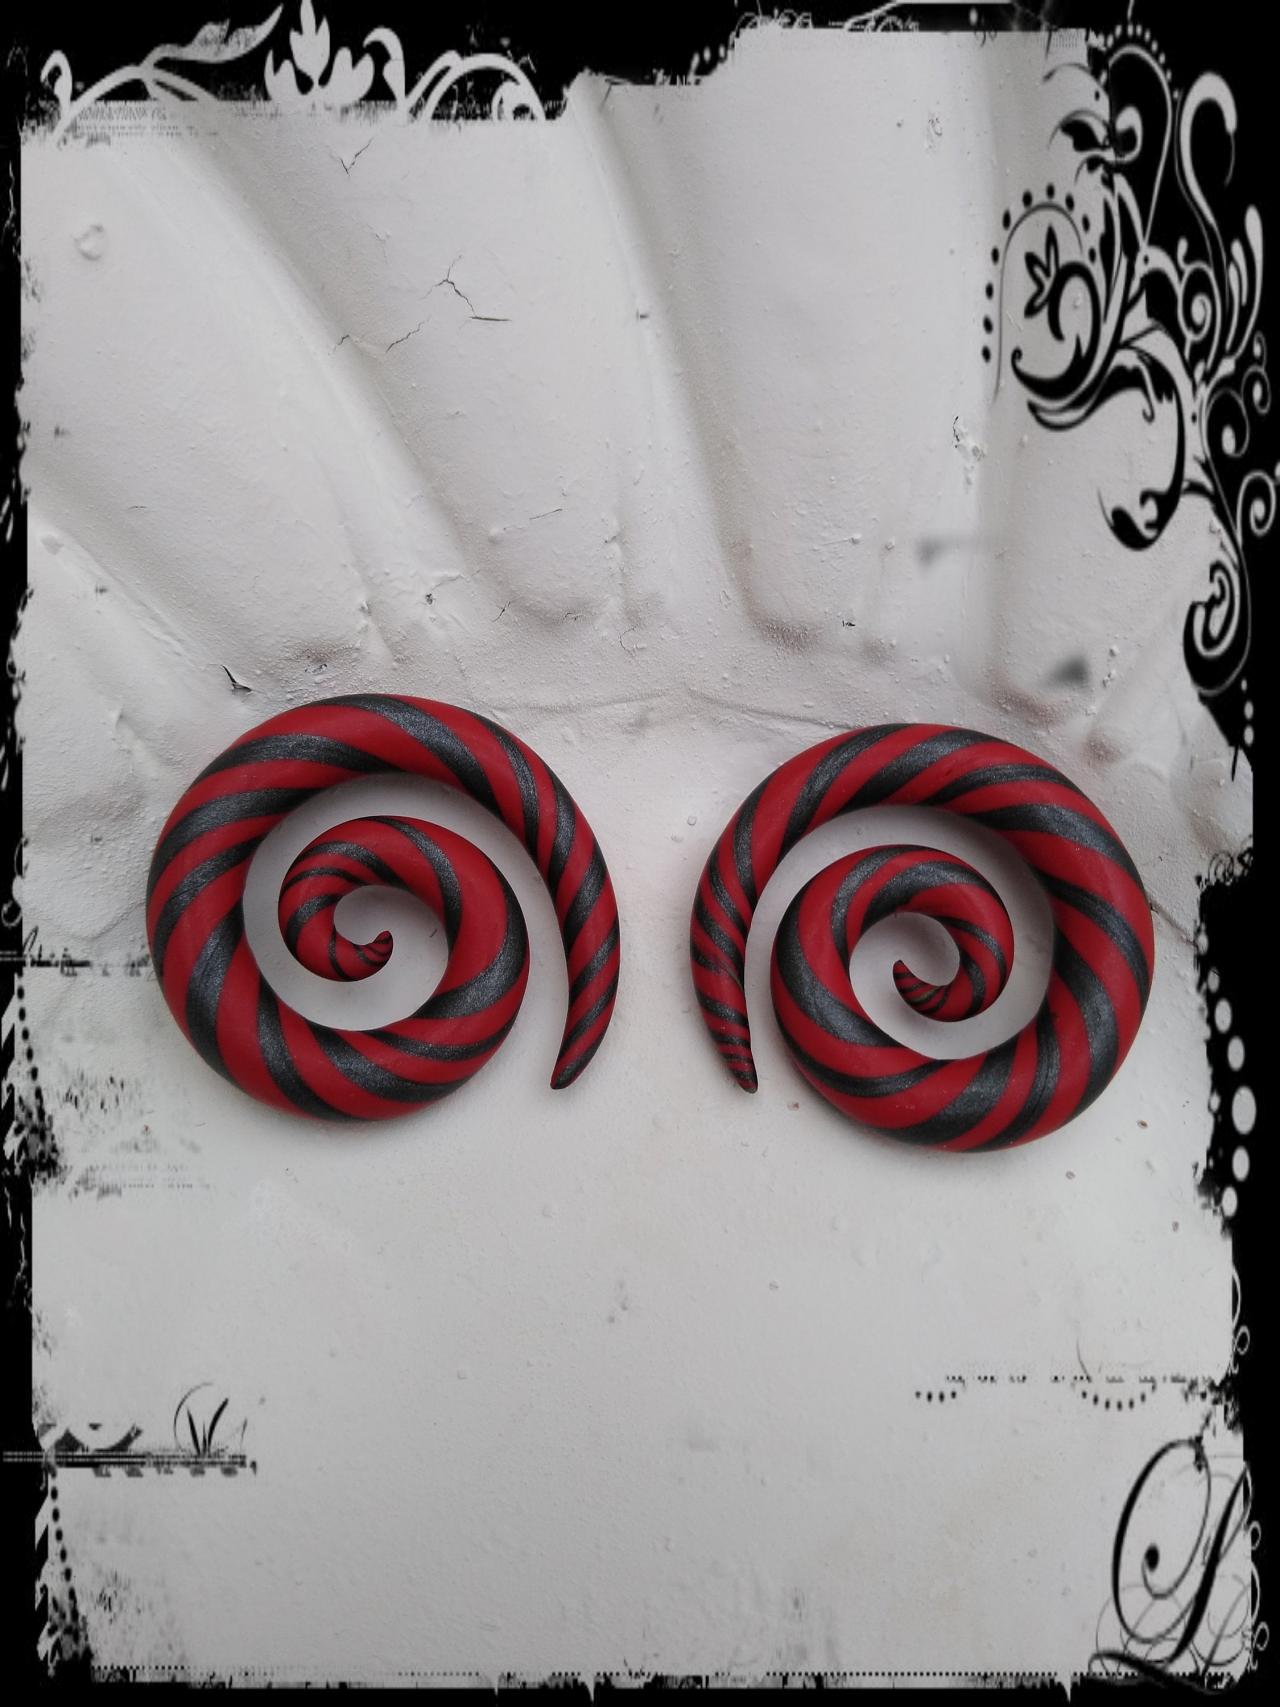 Spirals Ear Stretched Gauge Hanger Red And Dark Silver 0g